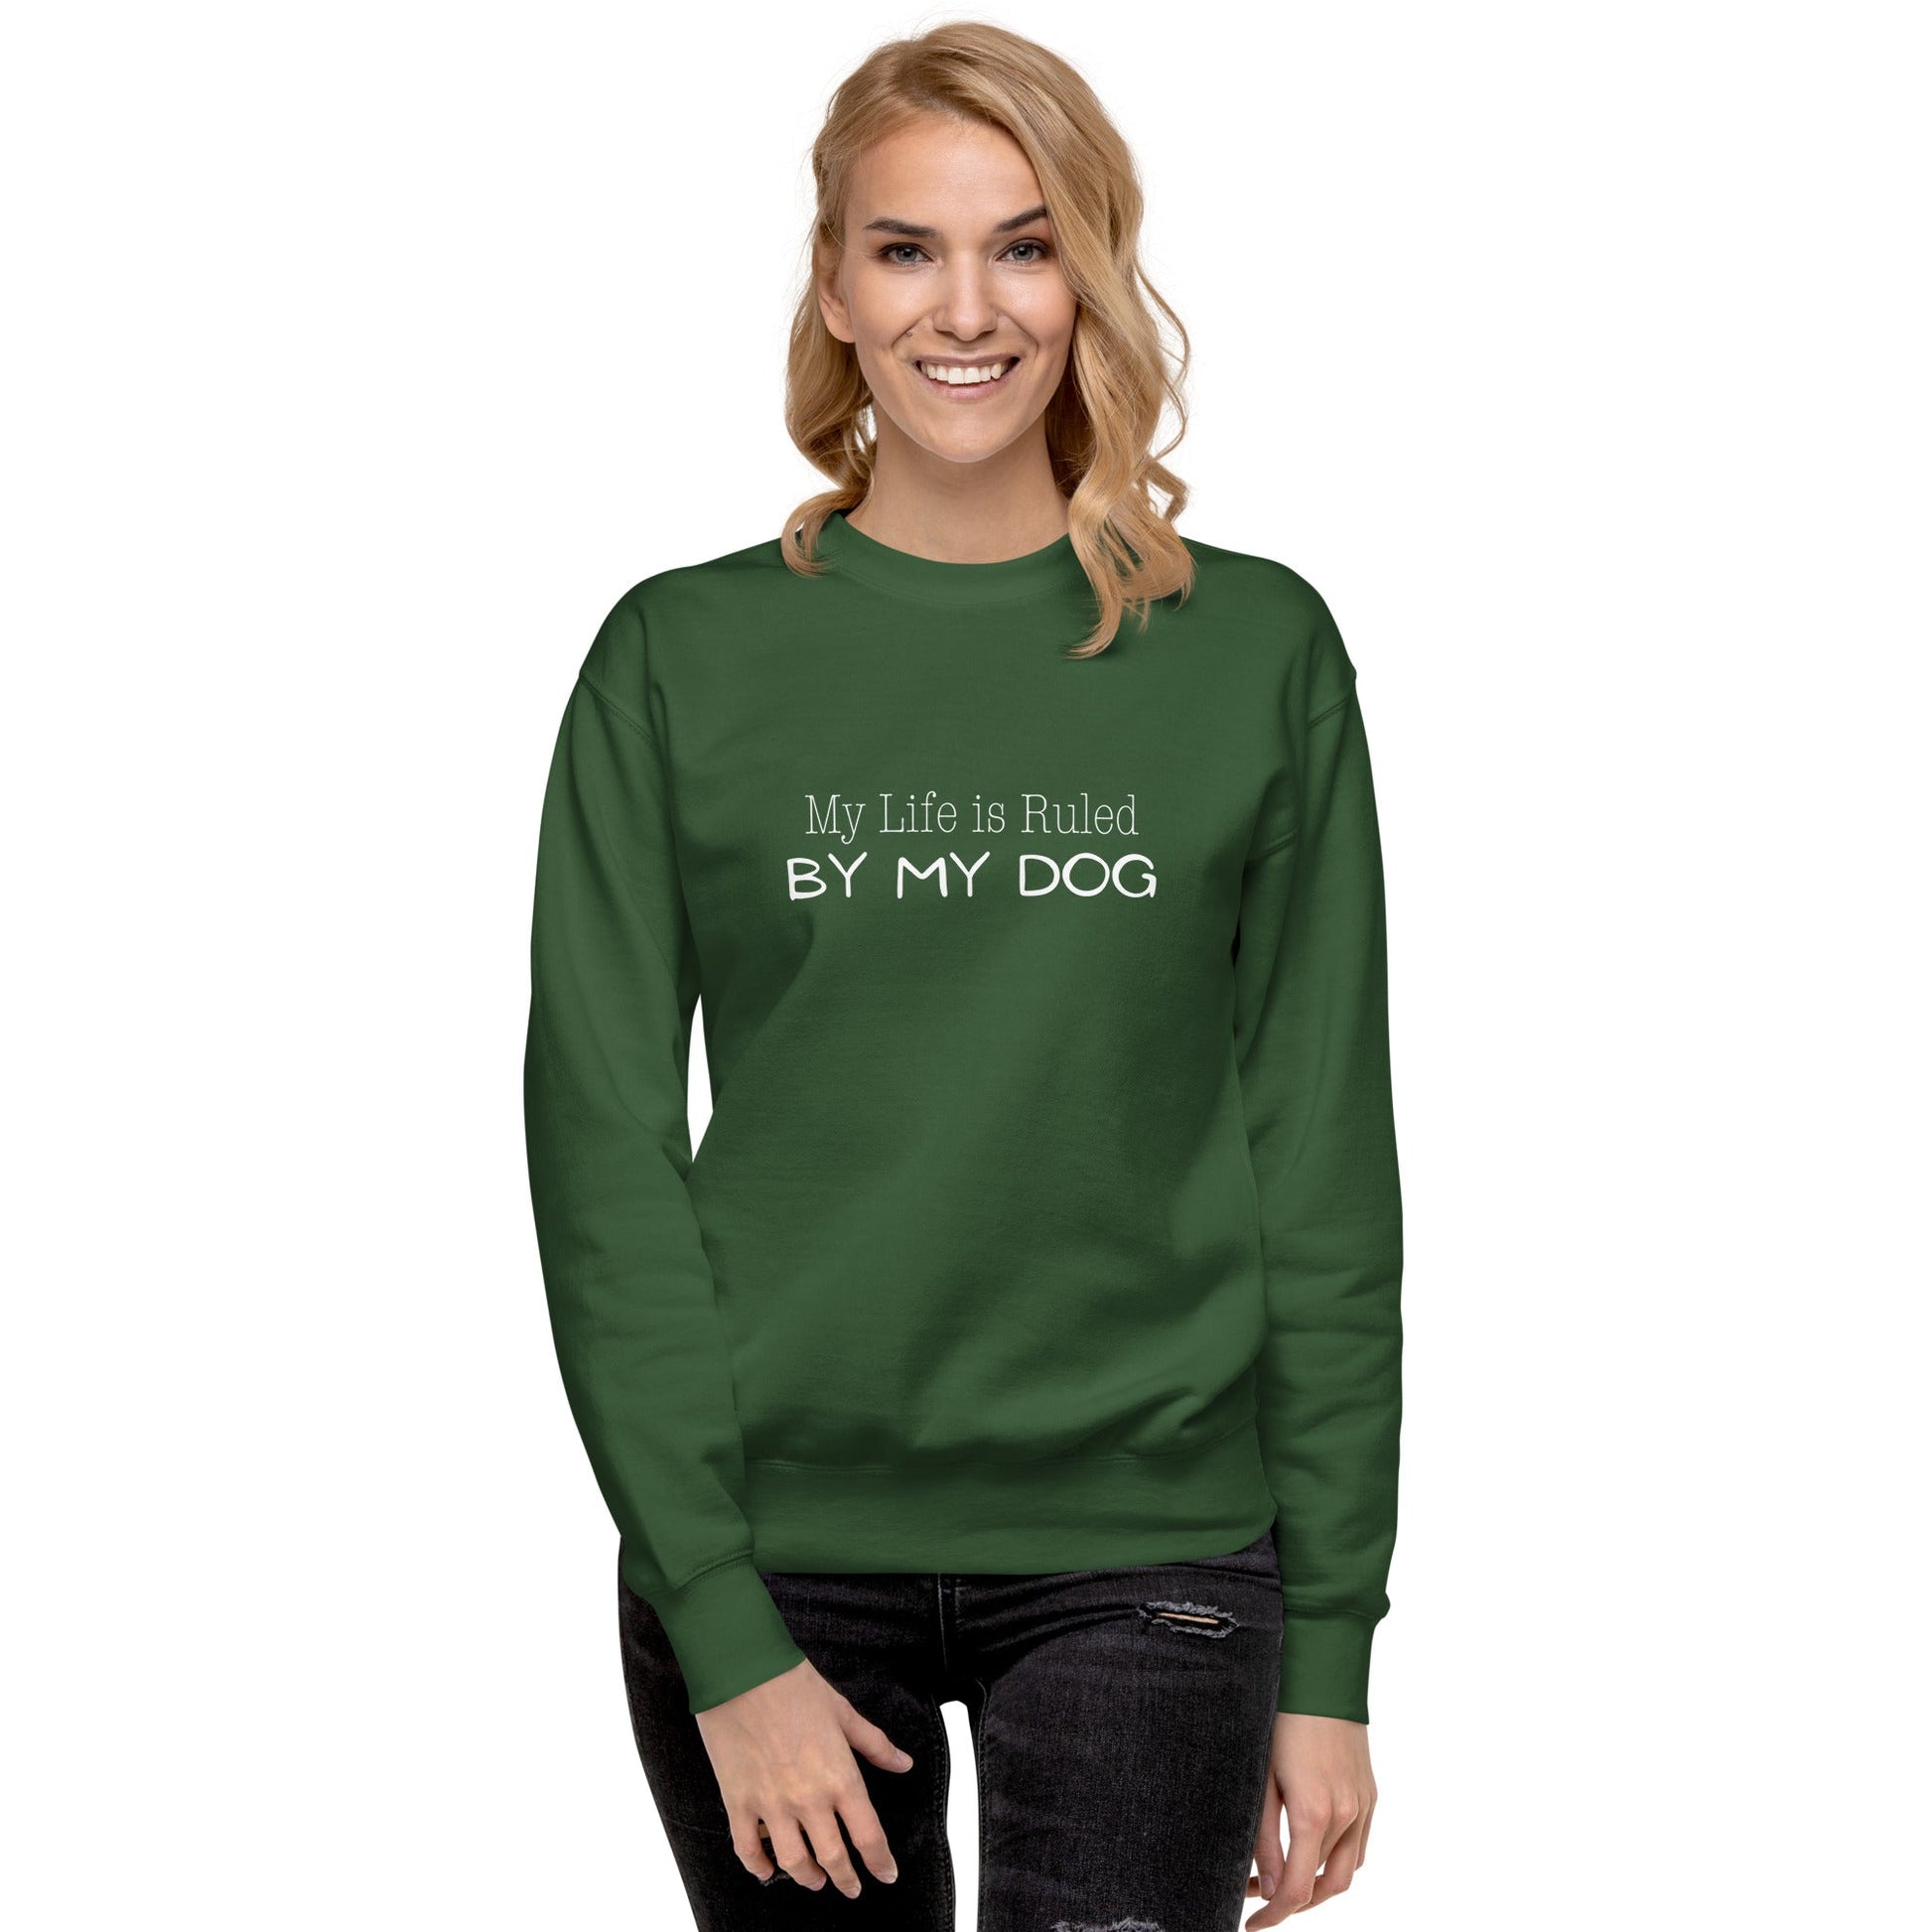 My Life is Ruled by Dog Sweatshirt